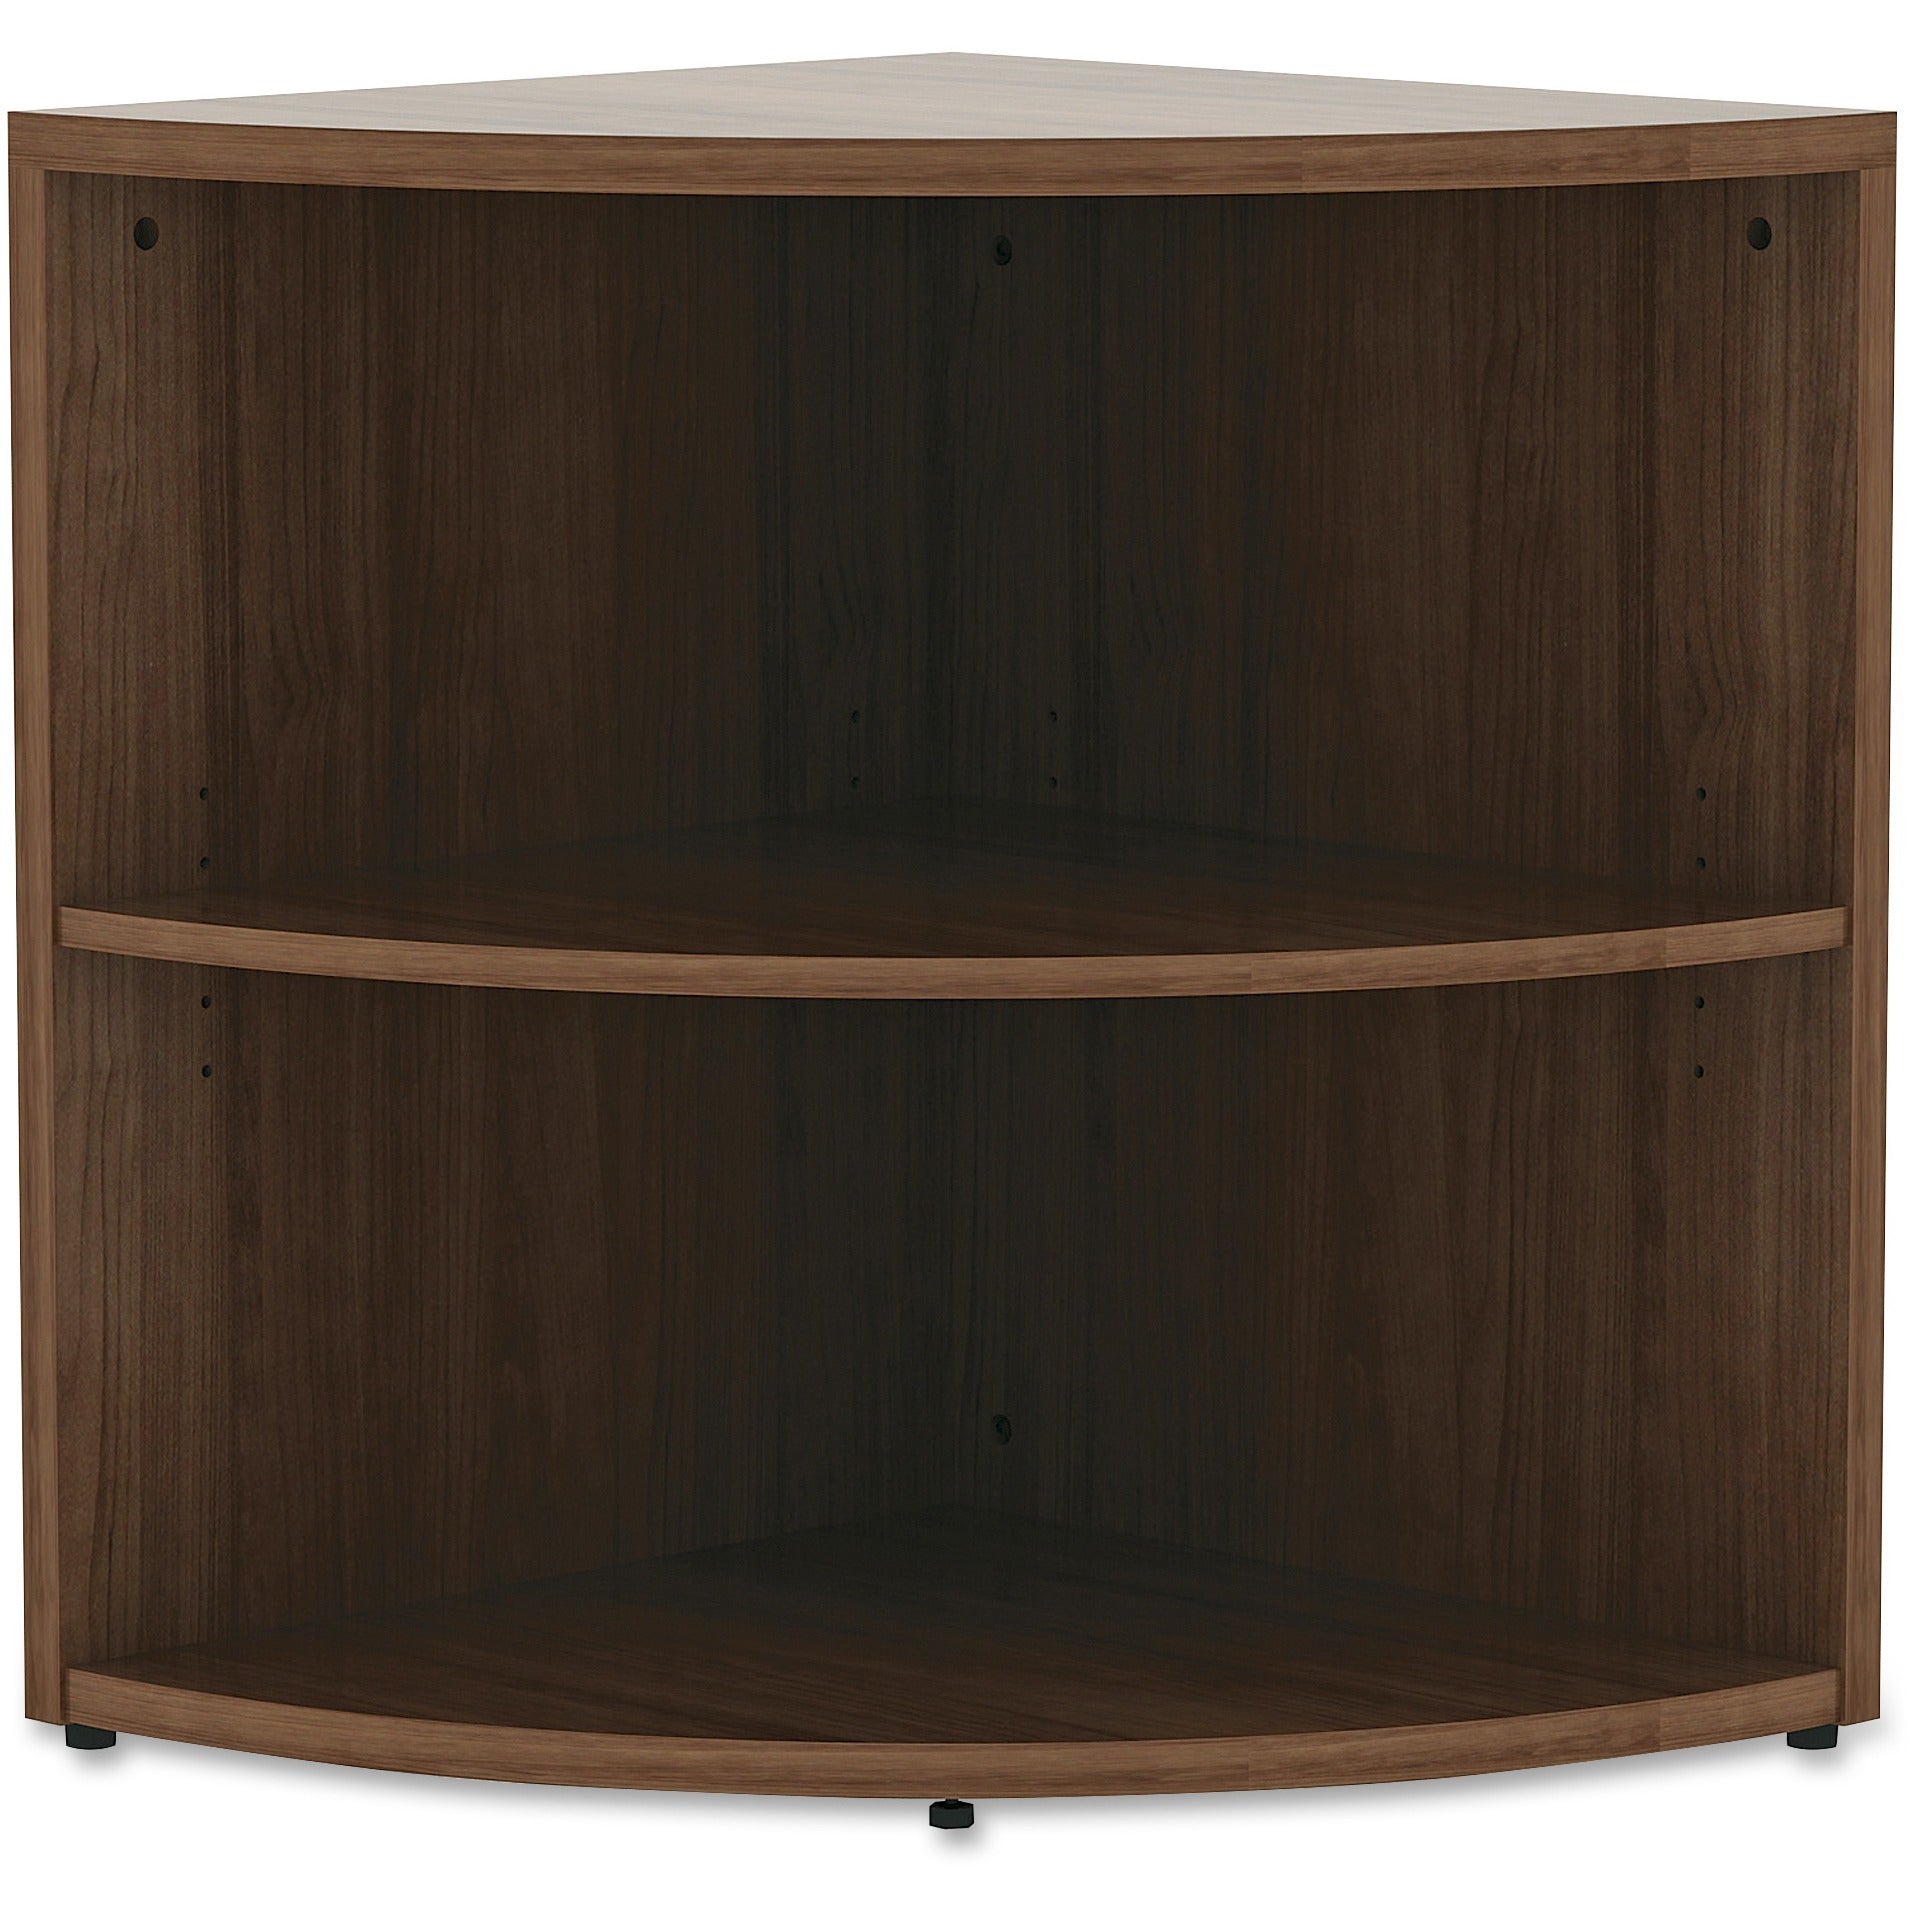 Lorell Essentials Series Desk End Corner Bookcase - 23.6" Height x 29.5" Width30.7" Length%Floor - Walnut - Laminate, Polyvinyl Chloride (PVC) - 1 Each - 2